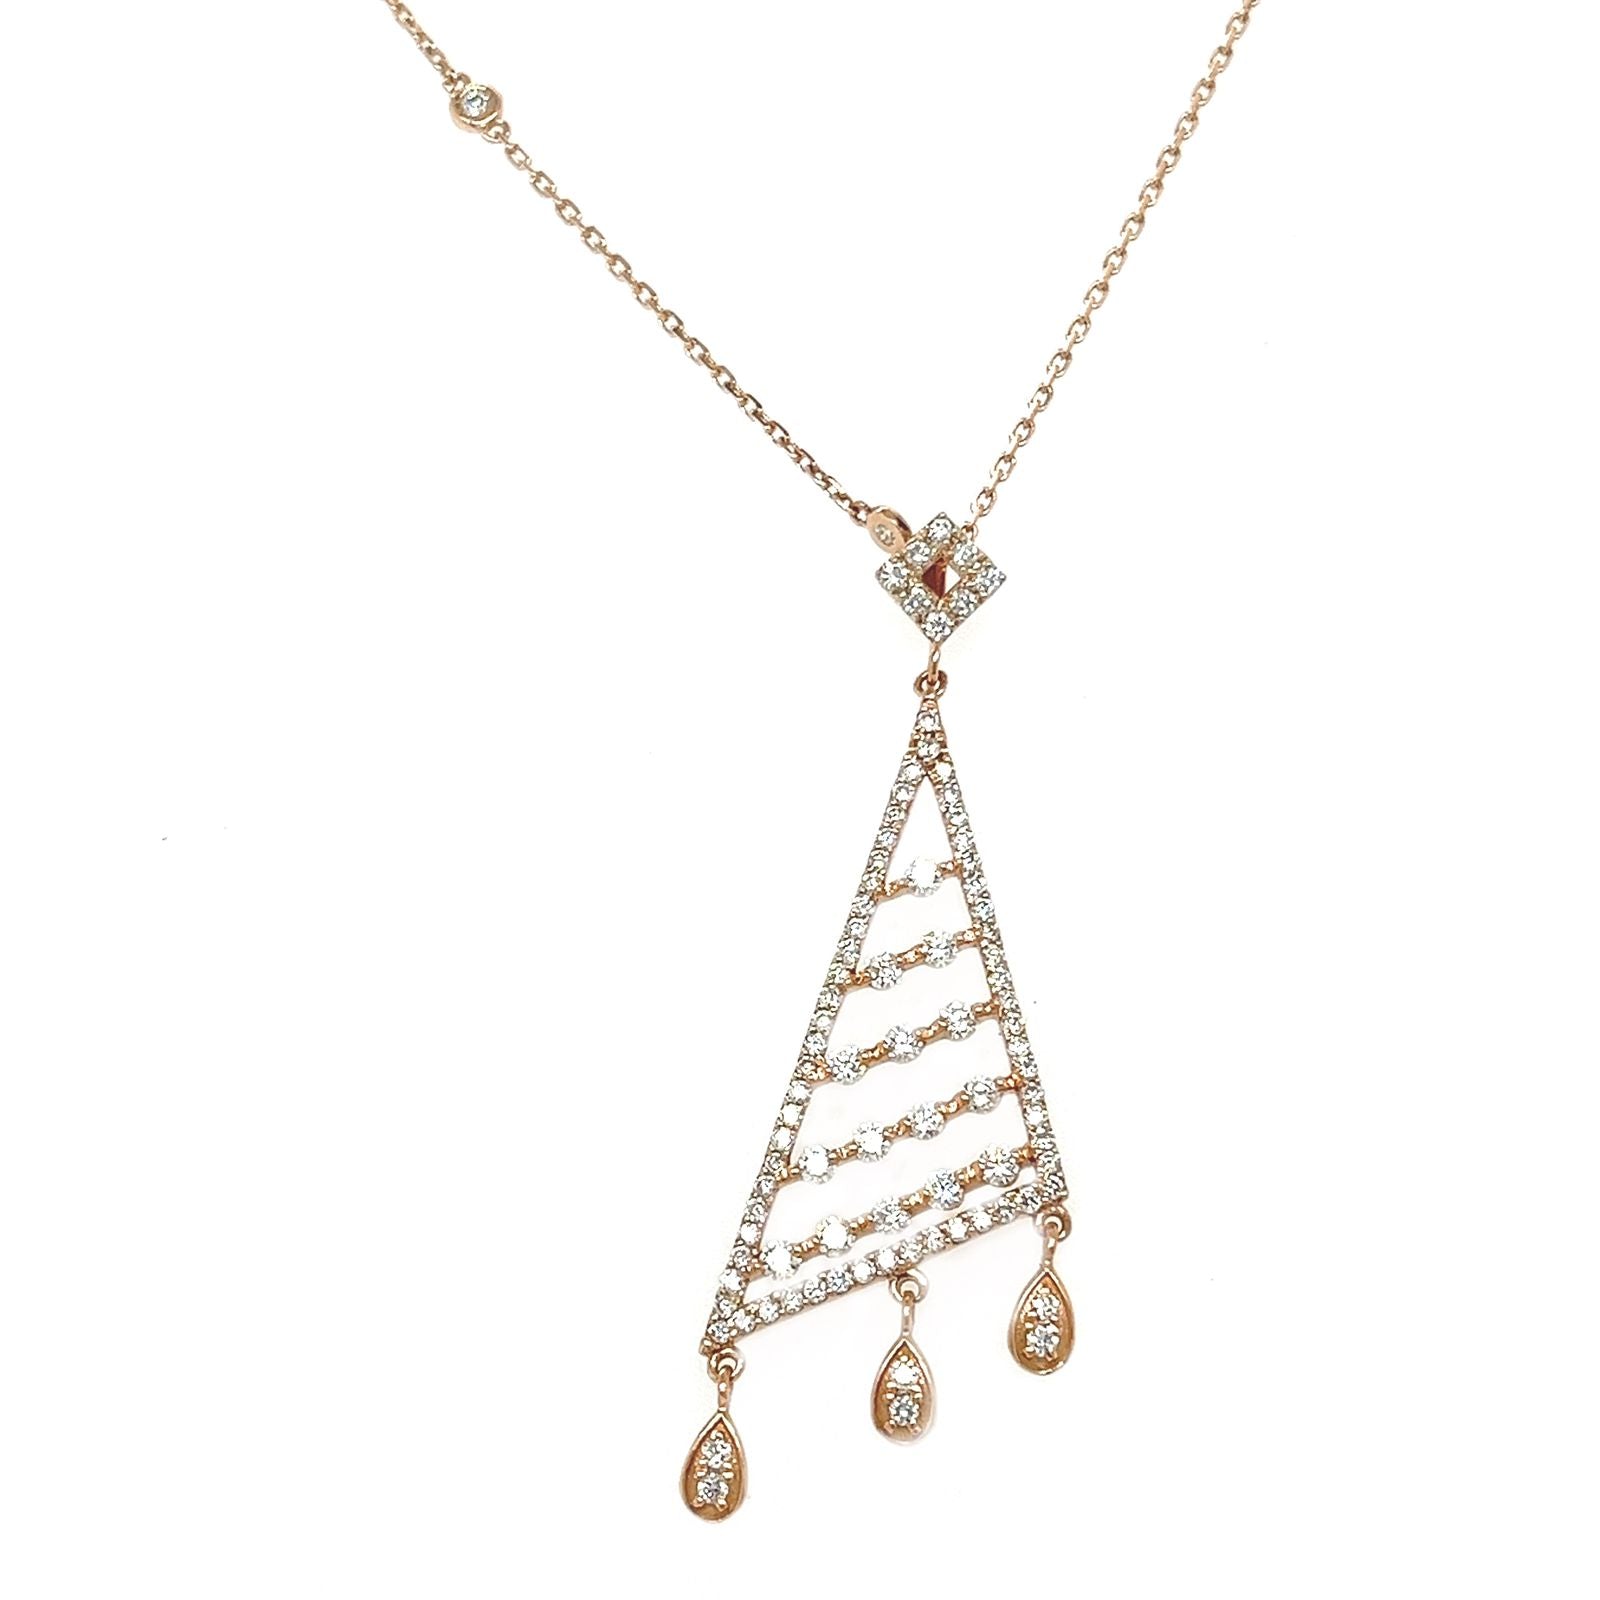 Dangling Geometrical Necklace in 18K Rose Gold - DZ01813B